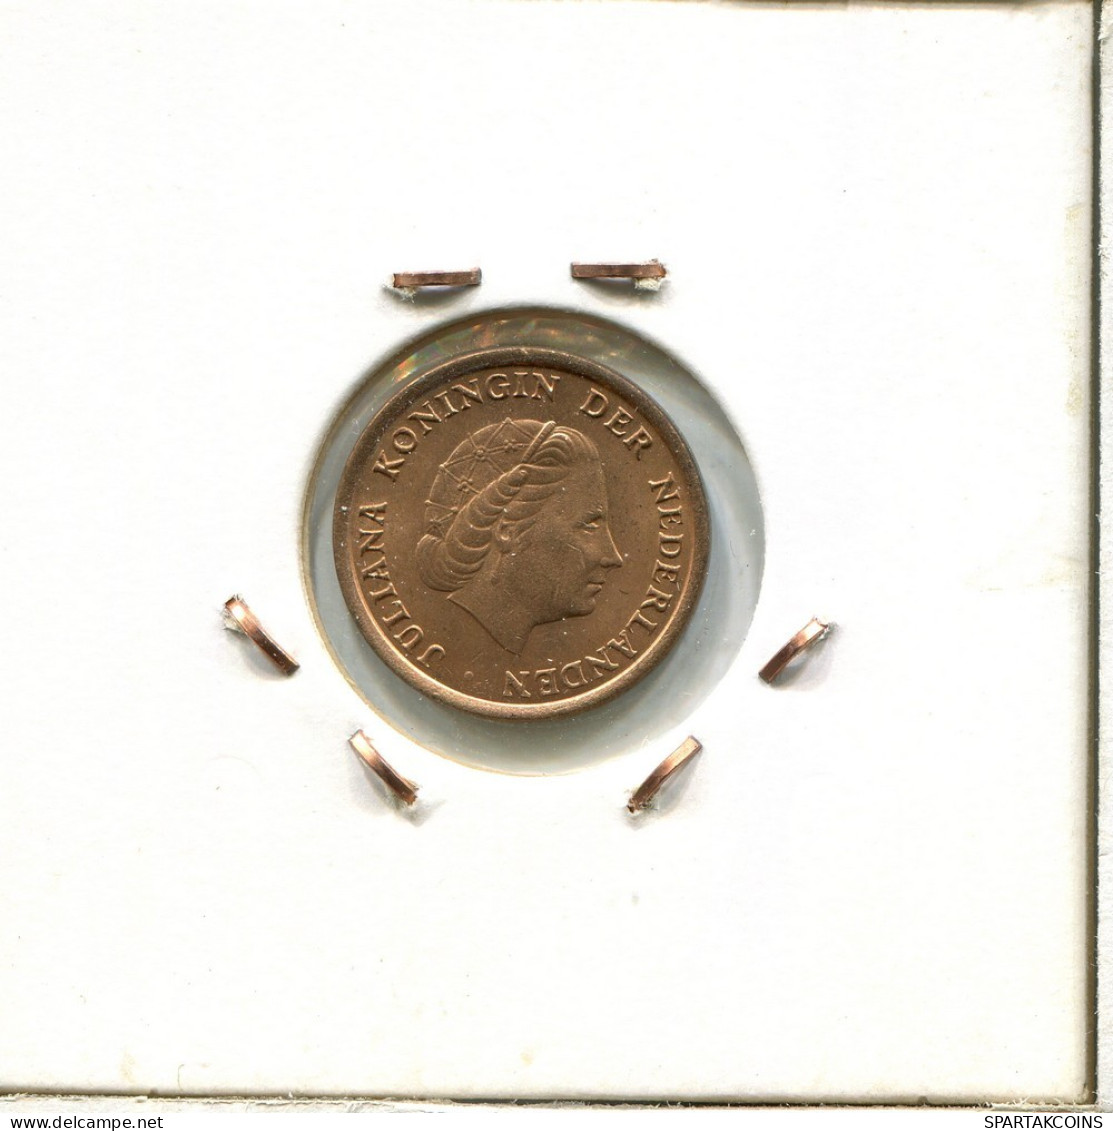 1 CENT 1980 NEERLANDÉS NETHERLANDS Moneda #AU407.E.A - 1948-1980 : Juliana